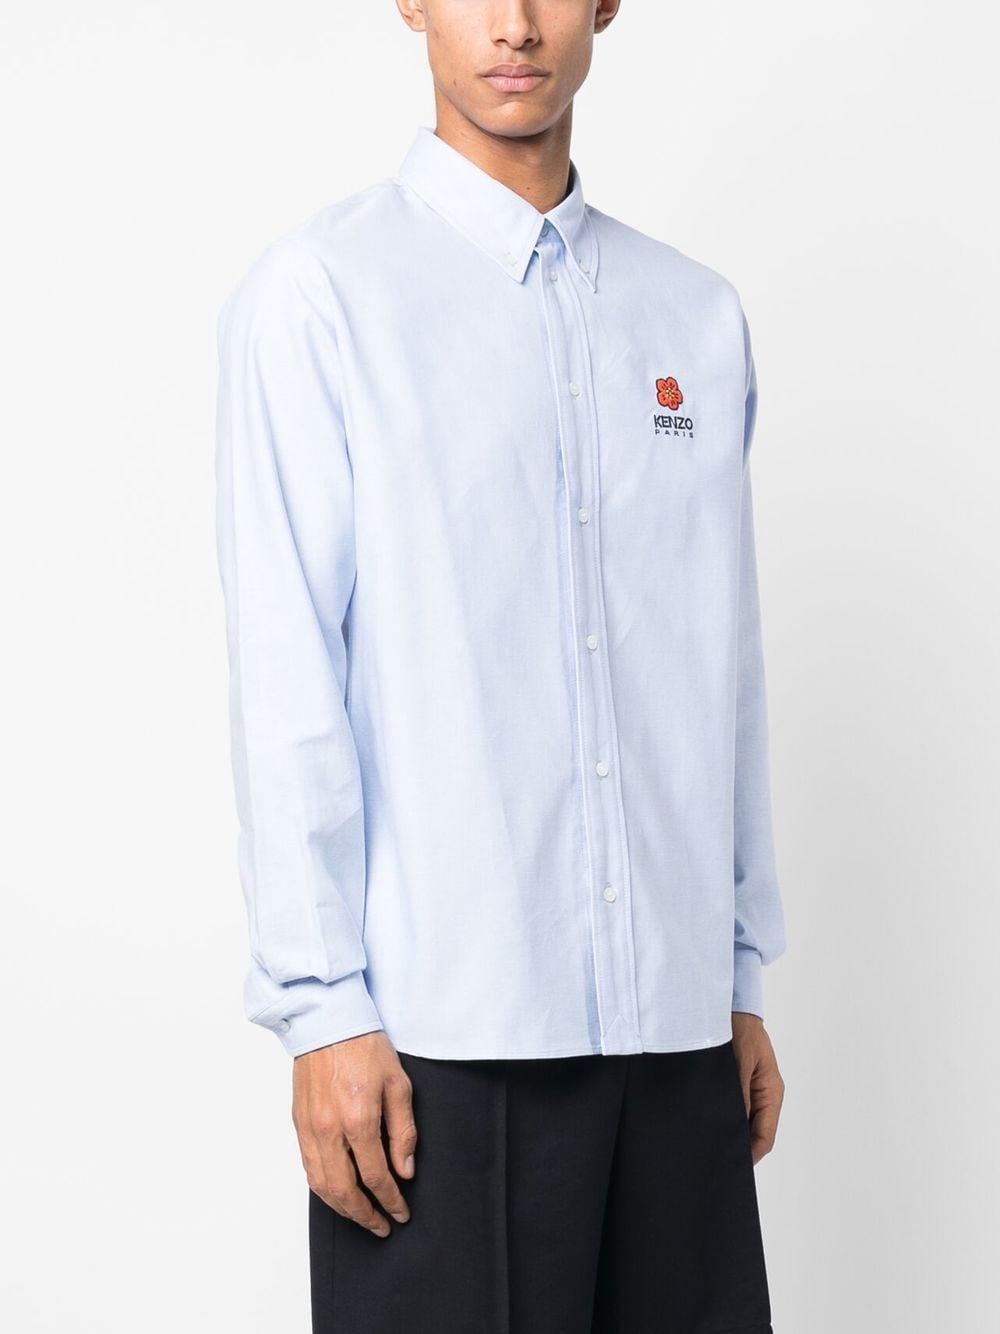 Blue Floral Crest Casual Shirt for Men